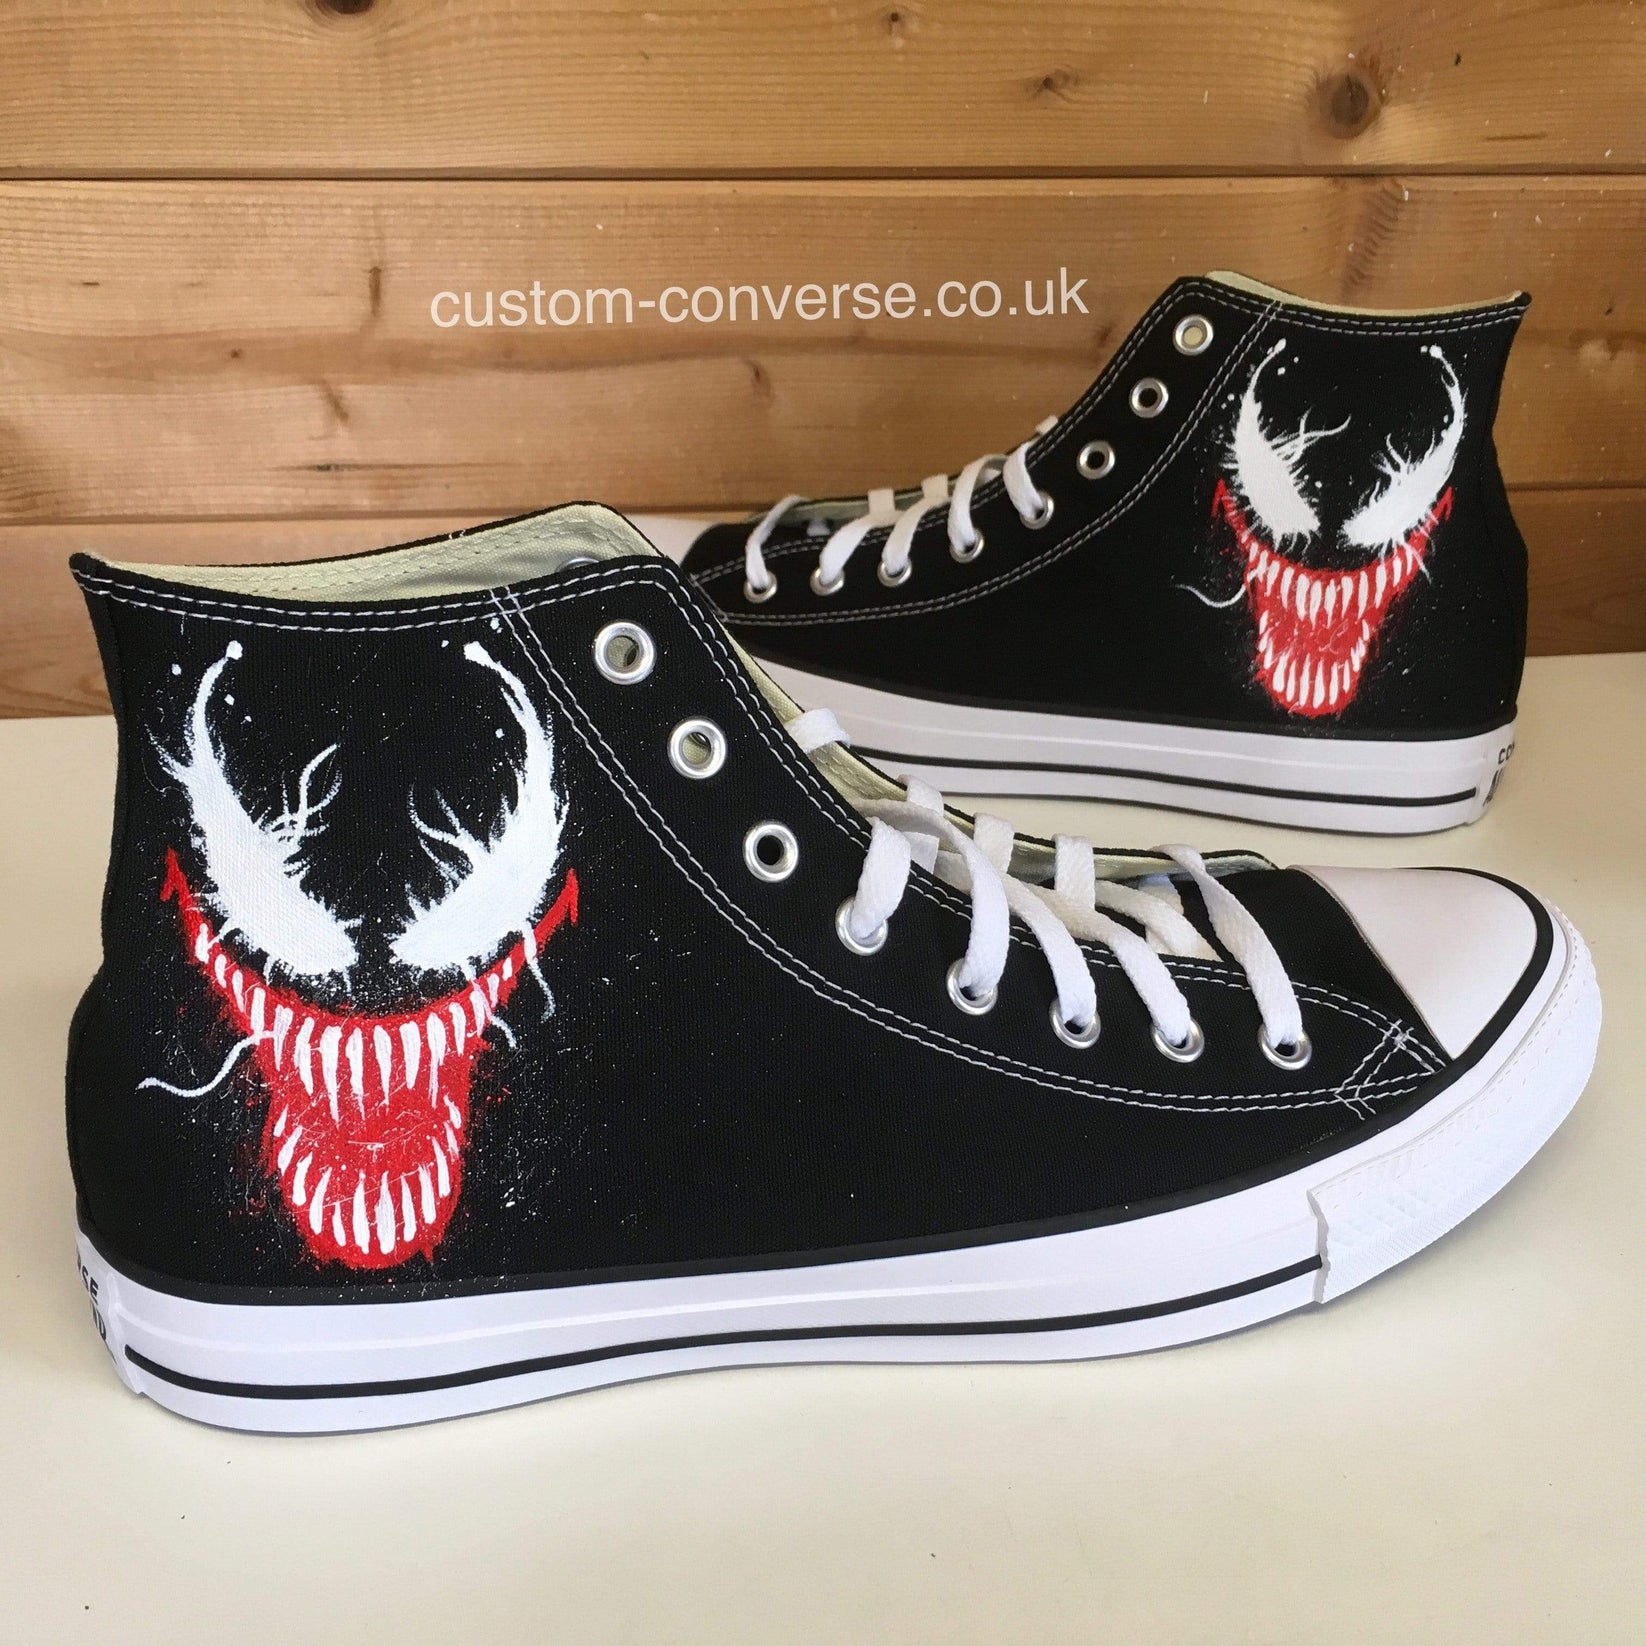 We Are Venom| Custom Converse Ltd